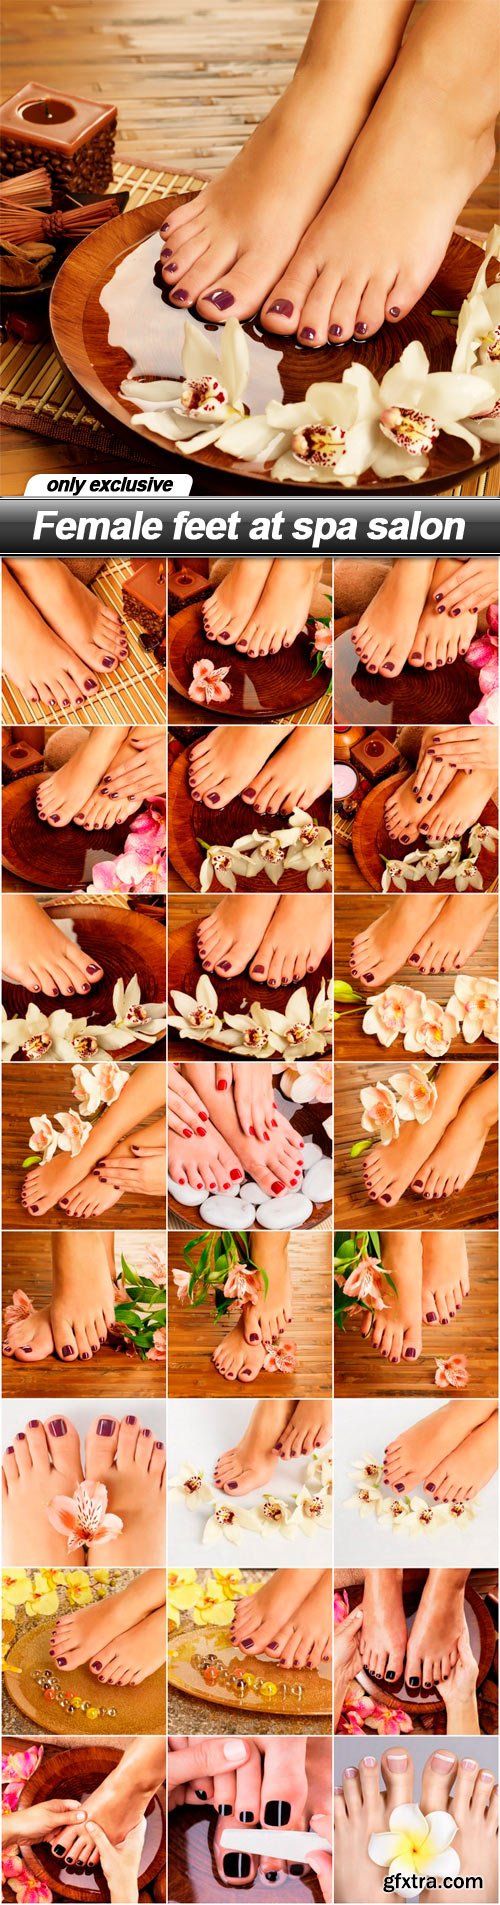 Female feet at spa salon - 25 UHQ JPEG